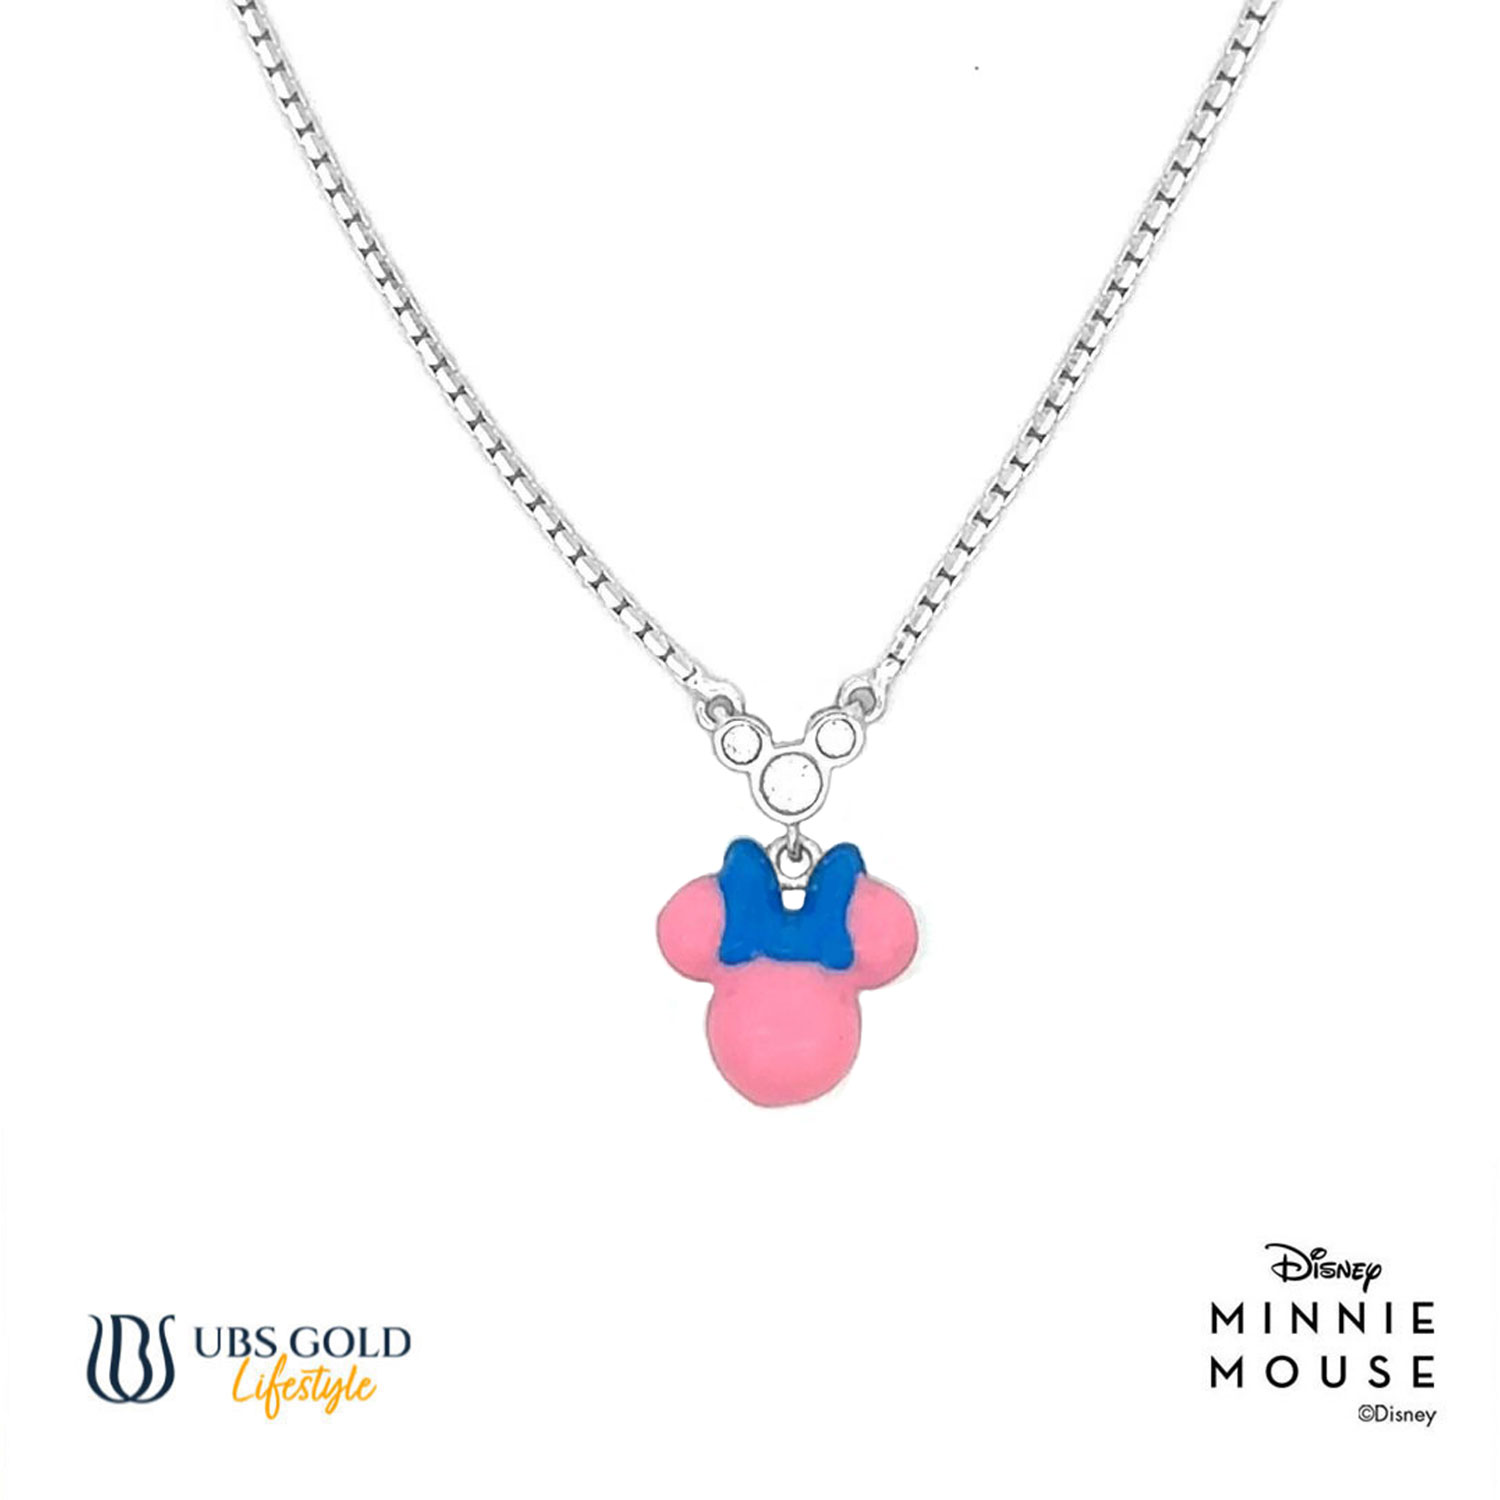 UBS Kalung Emas Anak Disney Minnie Mouse - Kky0409 - 17K